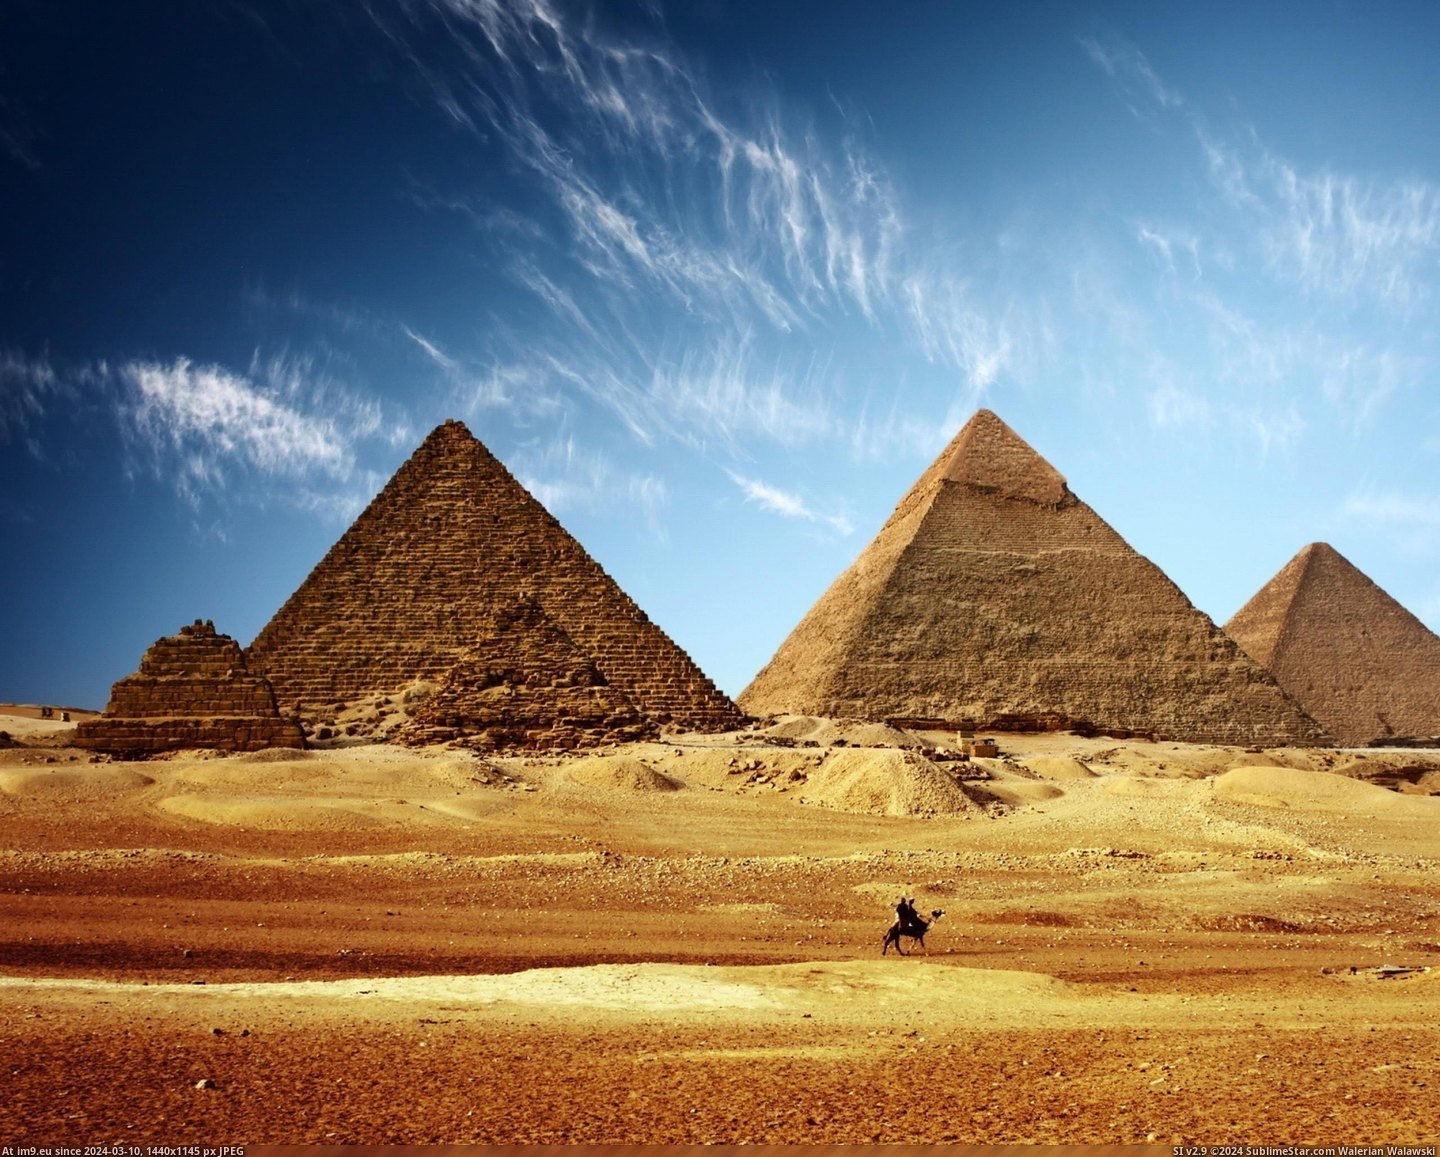 #Wallpaper #Beautiful #Blue #Sand #Pyramid #Egypt #2560x2048 #Wide #Golden #Sky Egypt - pyramid, golden sand and blue sky (Wallpaper 2560x2048) Pic. (Bild von album Rehost))